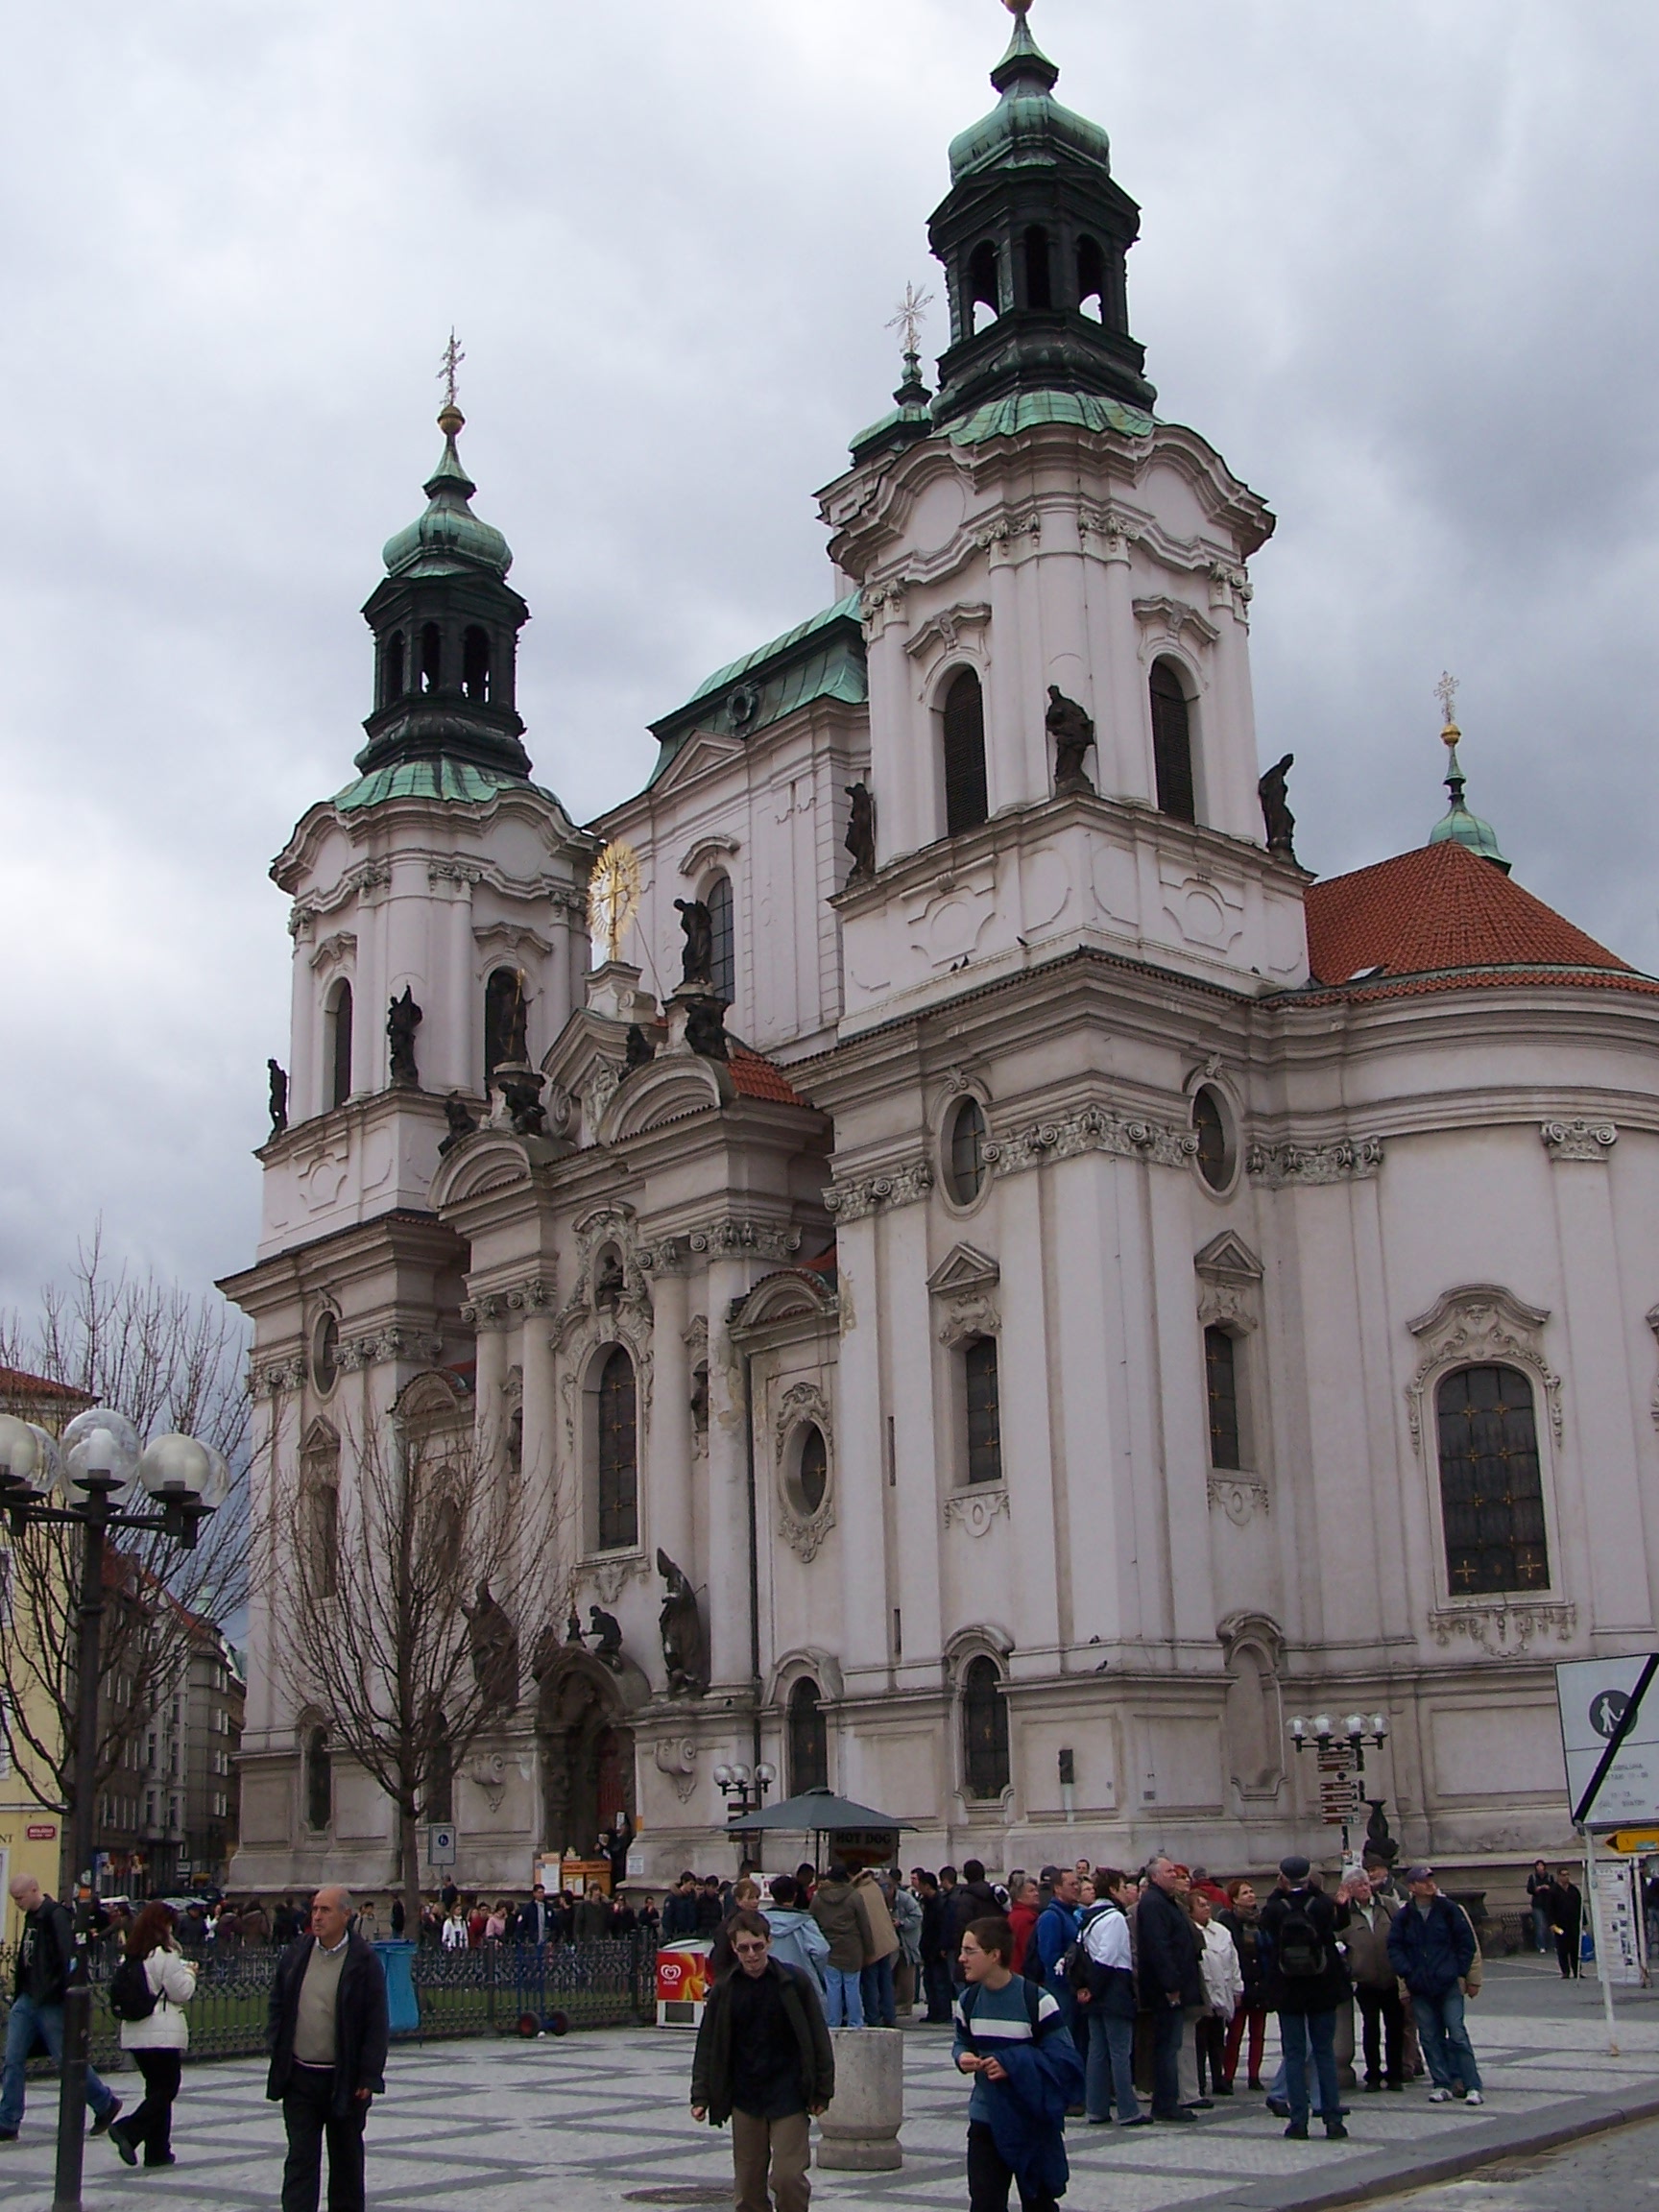 Prague - St Nicolas Church